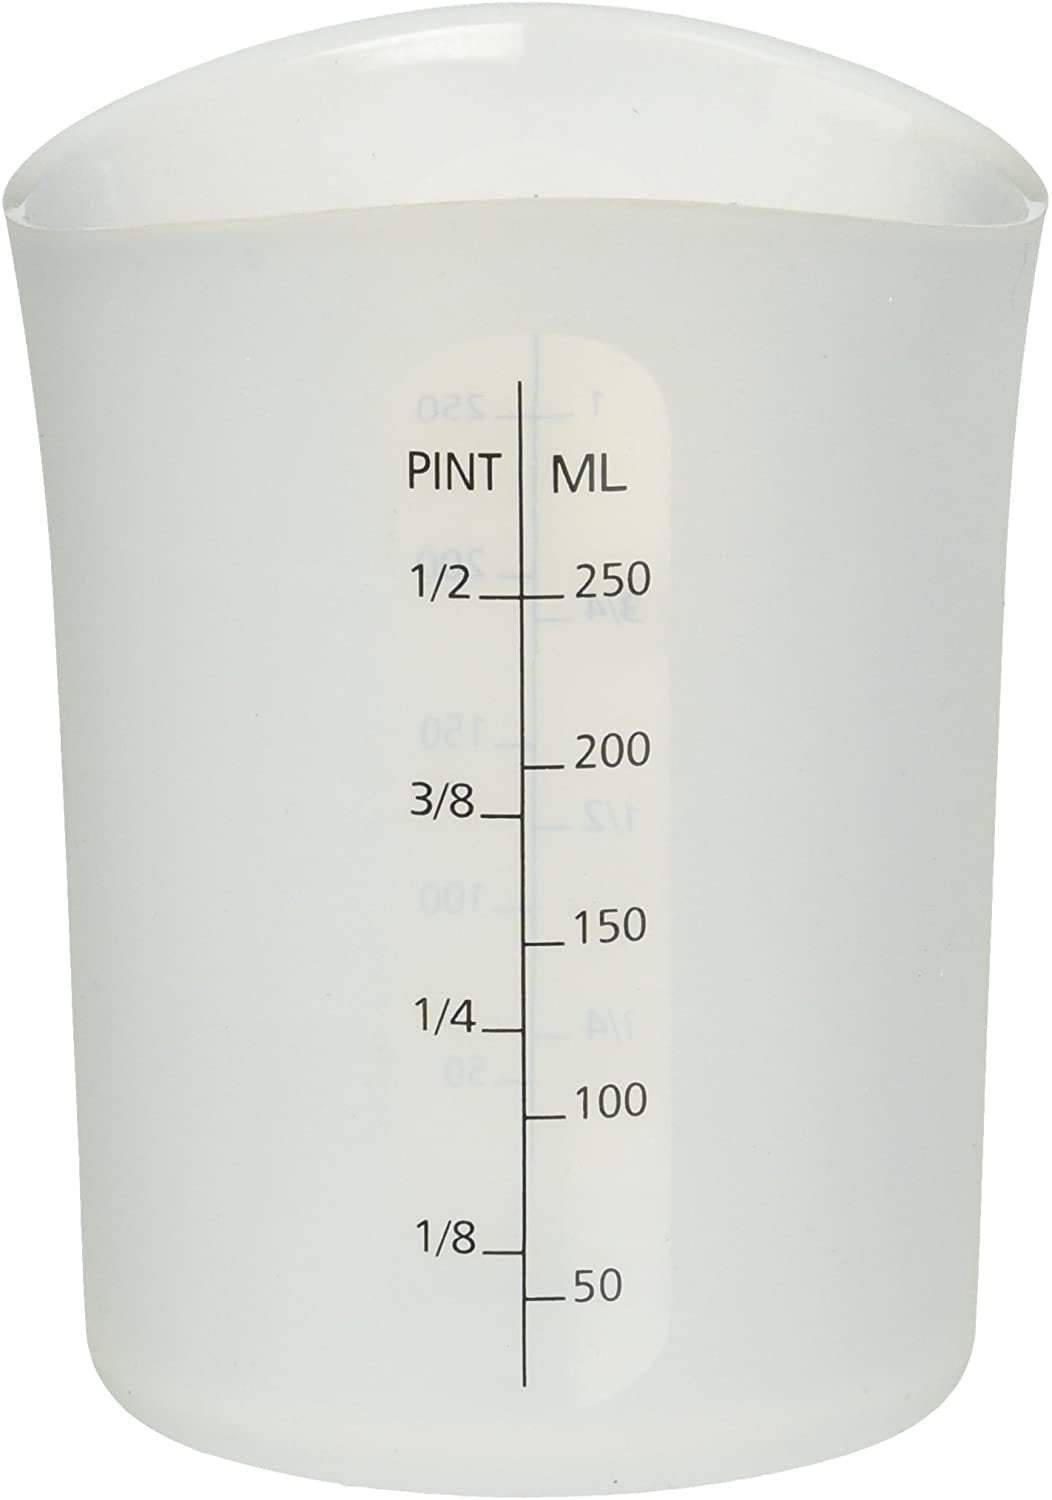 Norpro 3035 Measuring Cup, 8 oz, Plastic, Clear